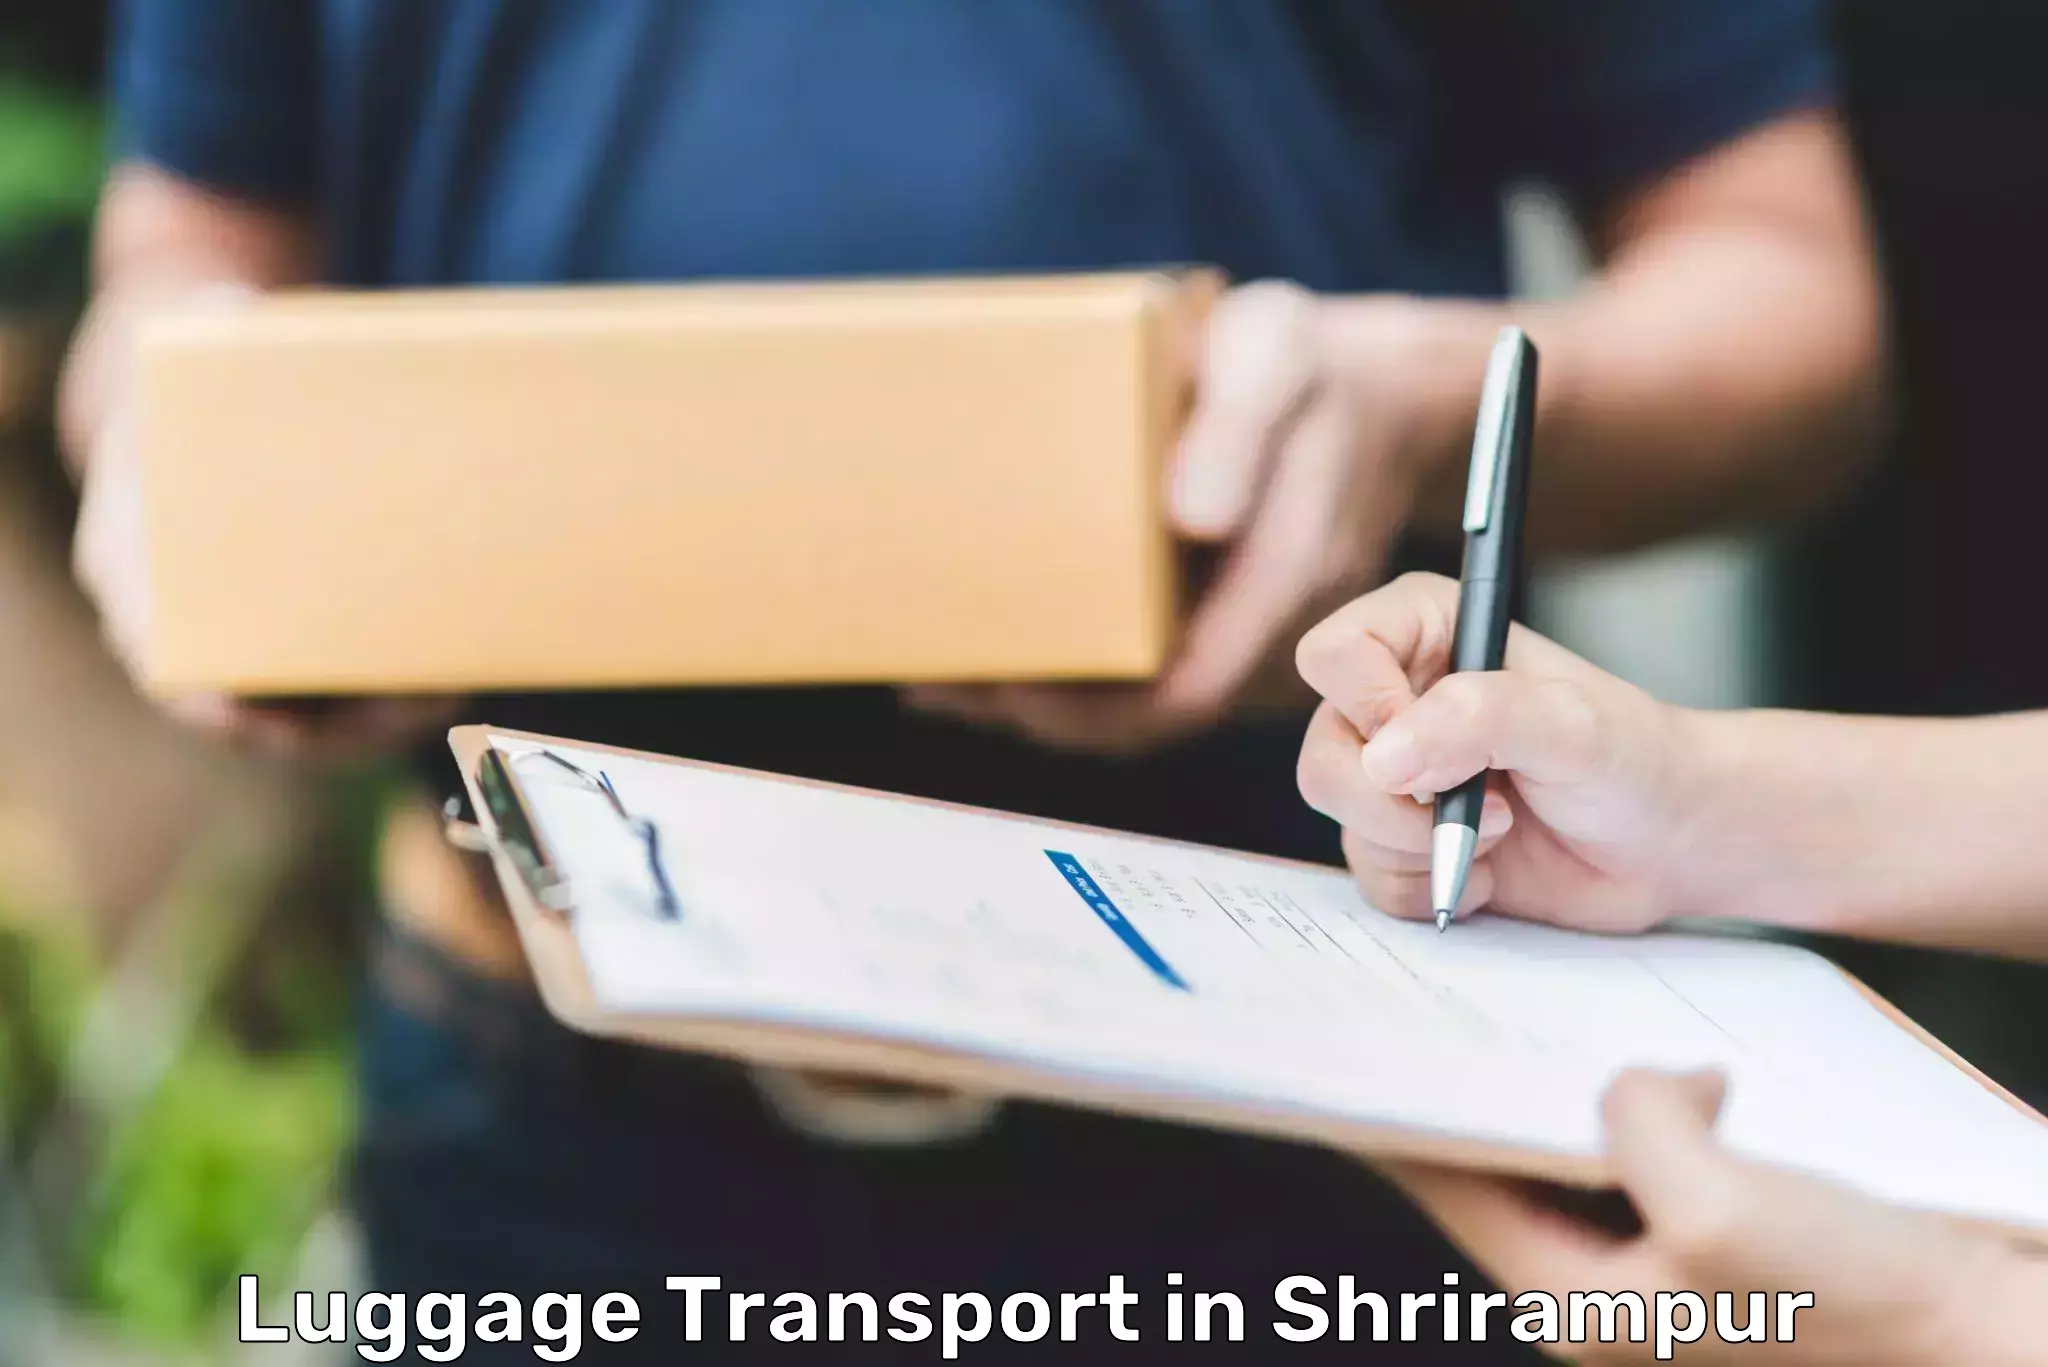 Business luggage transport in Shrirampur